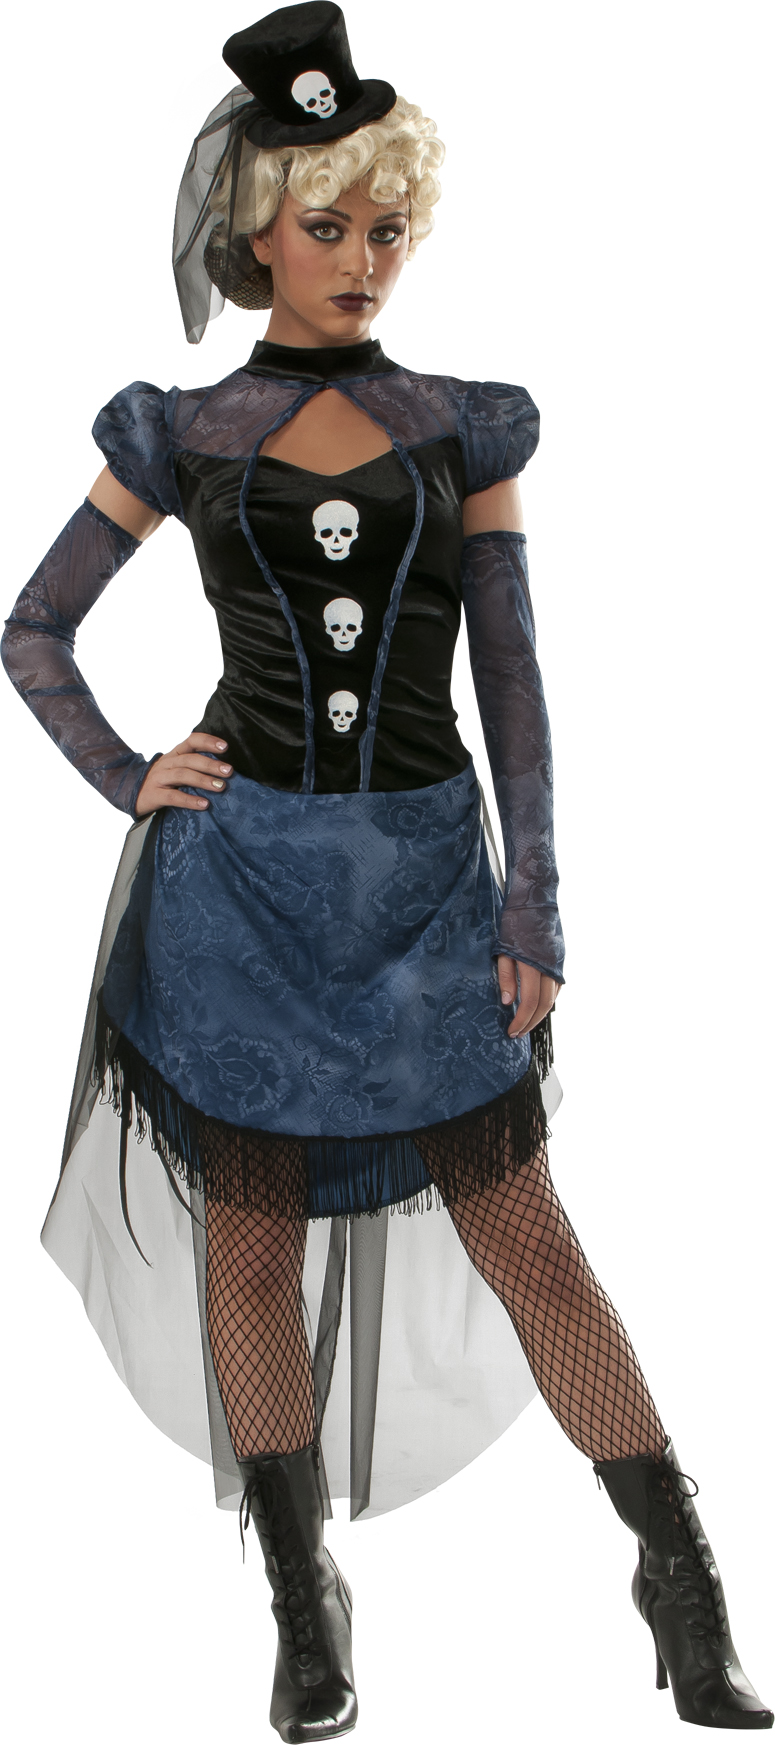 Adult size Steampunk Mistress Costume ...